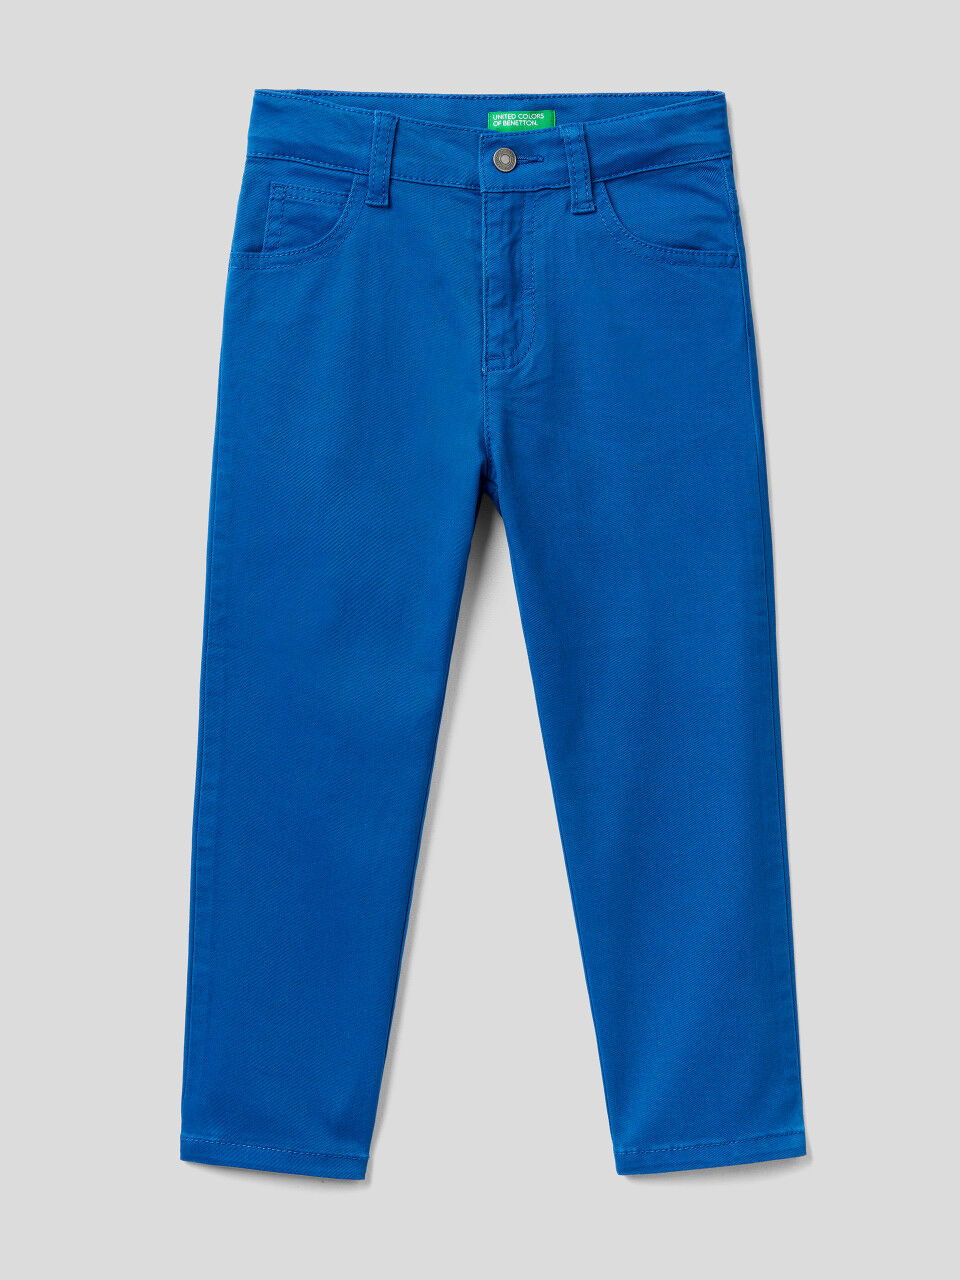 Chino Slim En Coton Stretch United Colors of Benetton Garçon Vêtements Pantalons & Jeans Pantalons Pantalons Slim & Skinny 